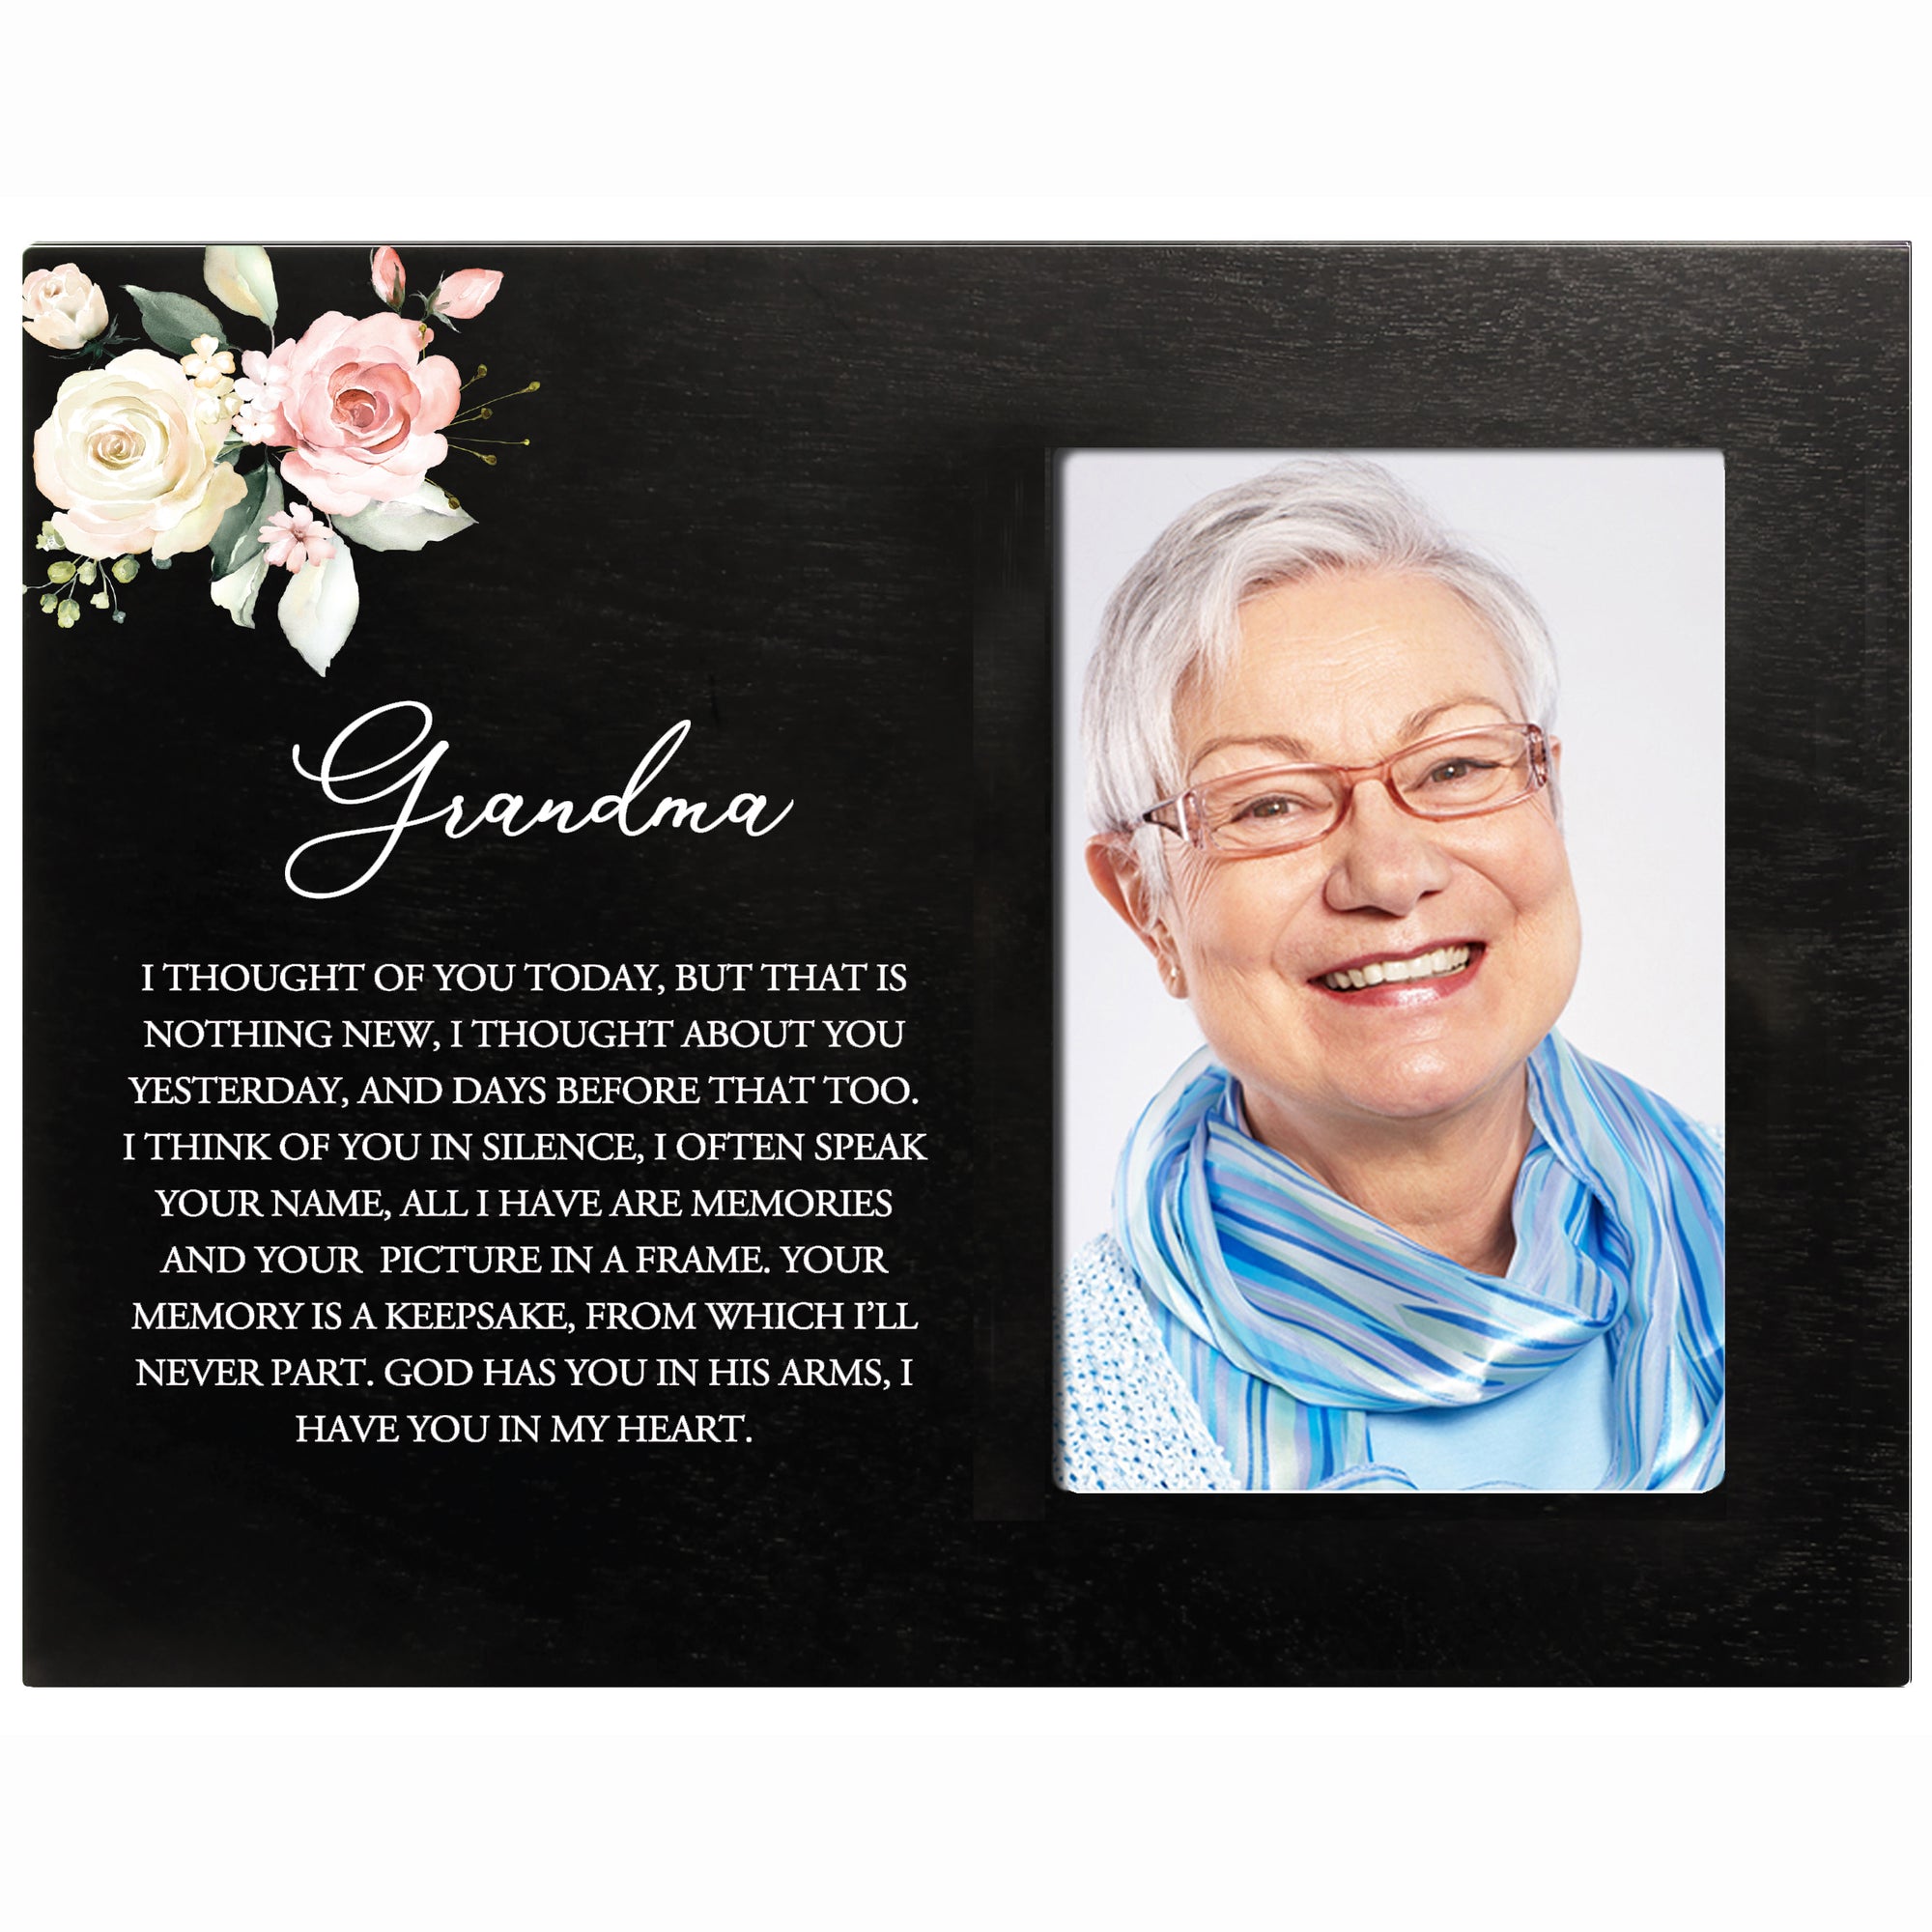 Sentimental Human Memorial Photo Frame Gift Bereavement Gift Idea - Grandma I thought of you